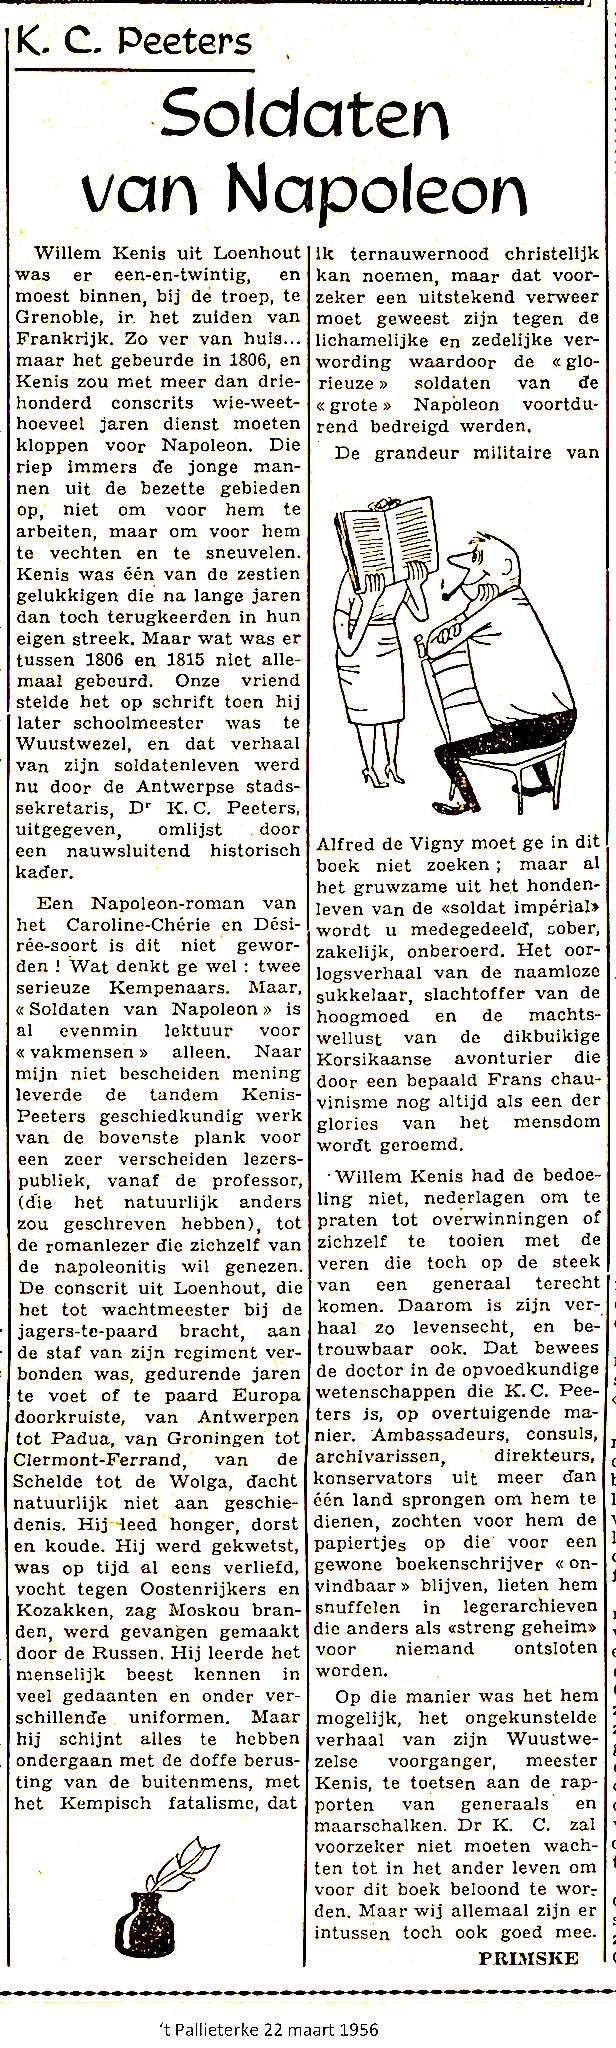 Boekbespreking in 't Pallieterke, 22/3/1956 (Floris Prims)